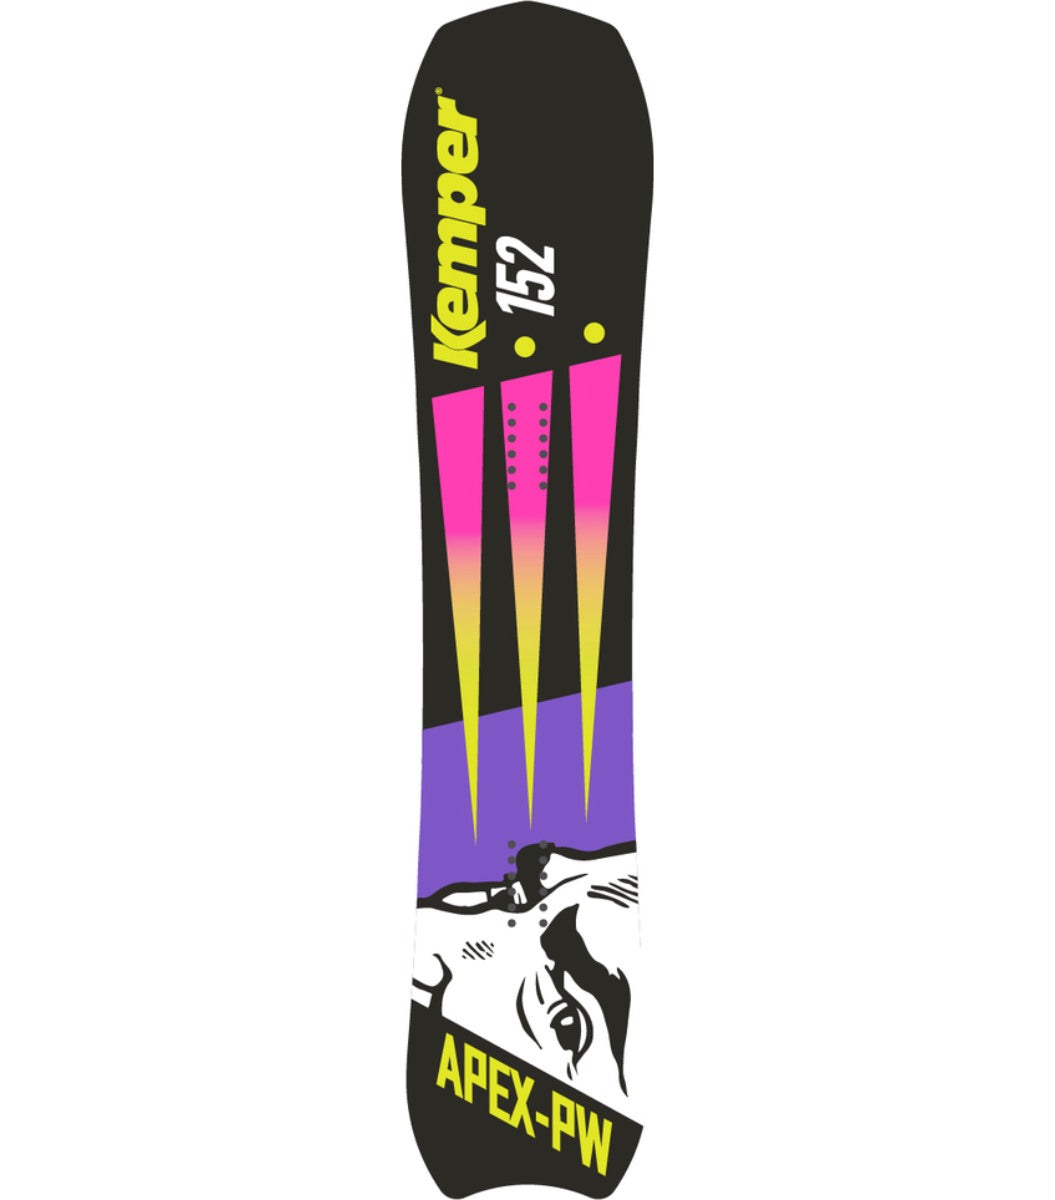 Se Kemper Apex 1990/91 Snowboard - 160 cm hos RejseGear.dk